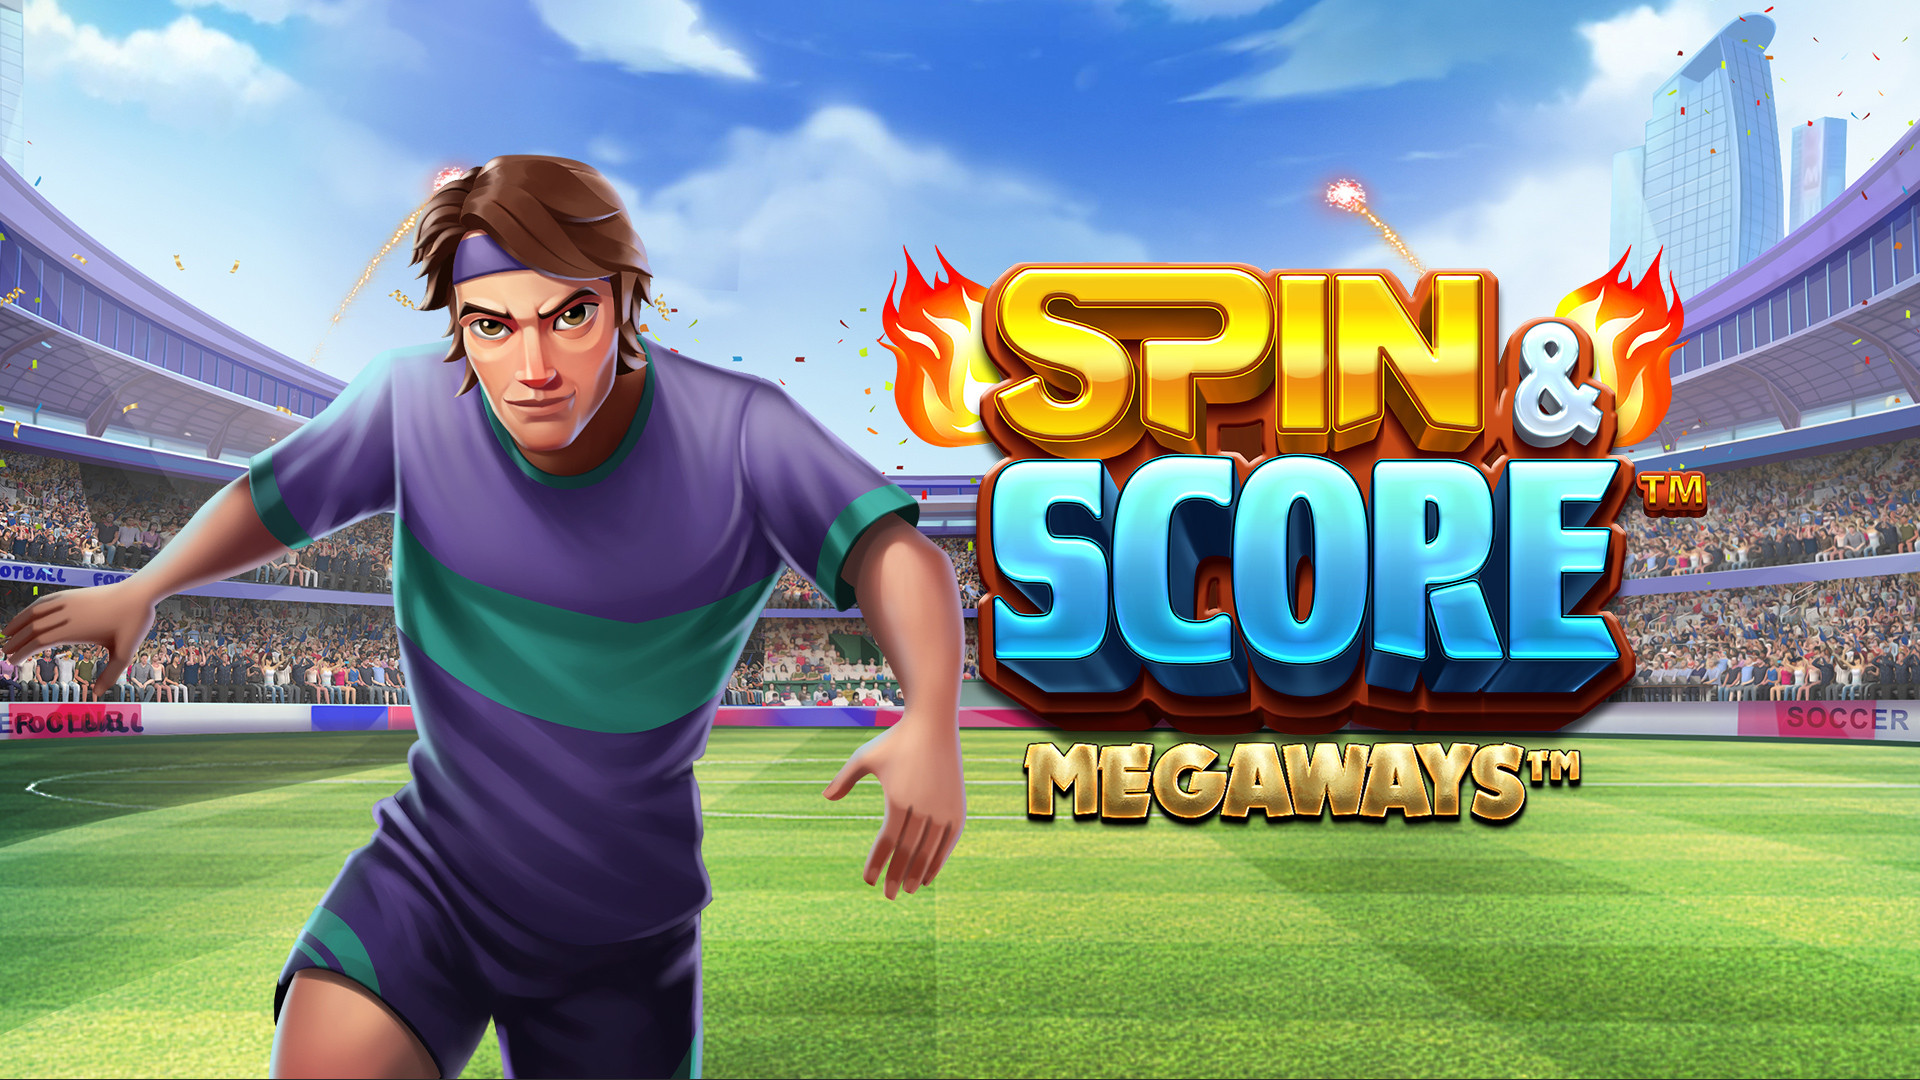 Spin & Score MEGAWAYS